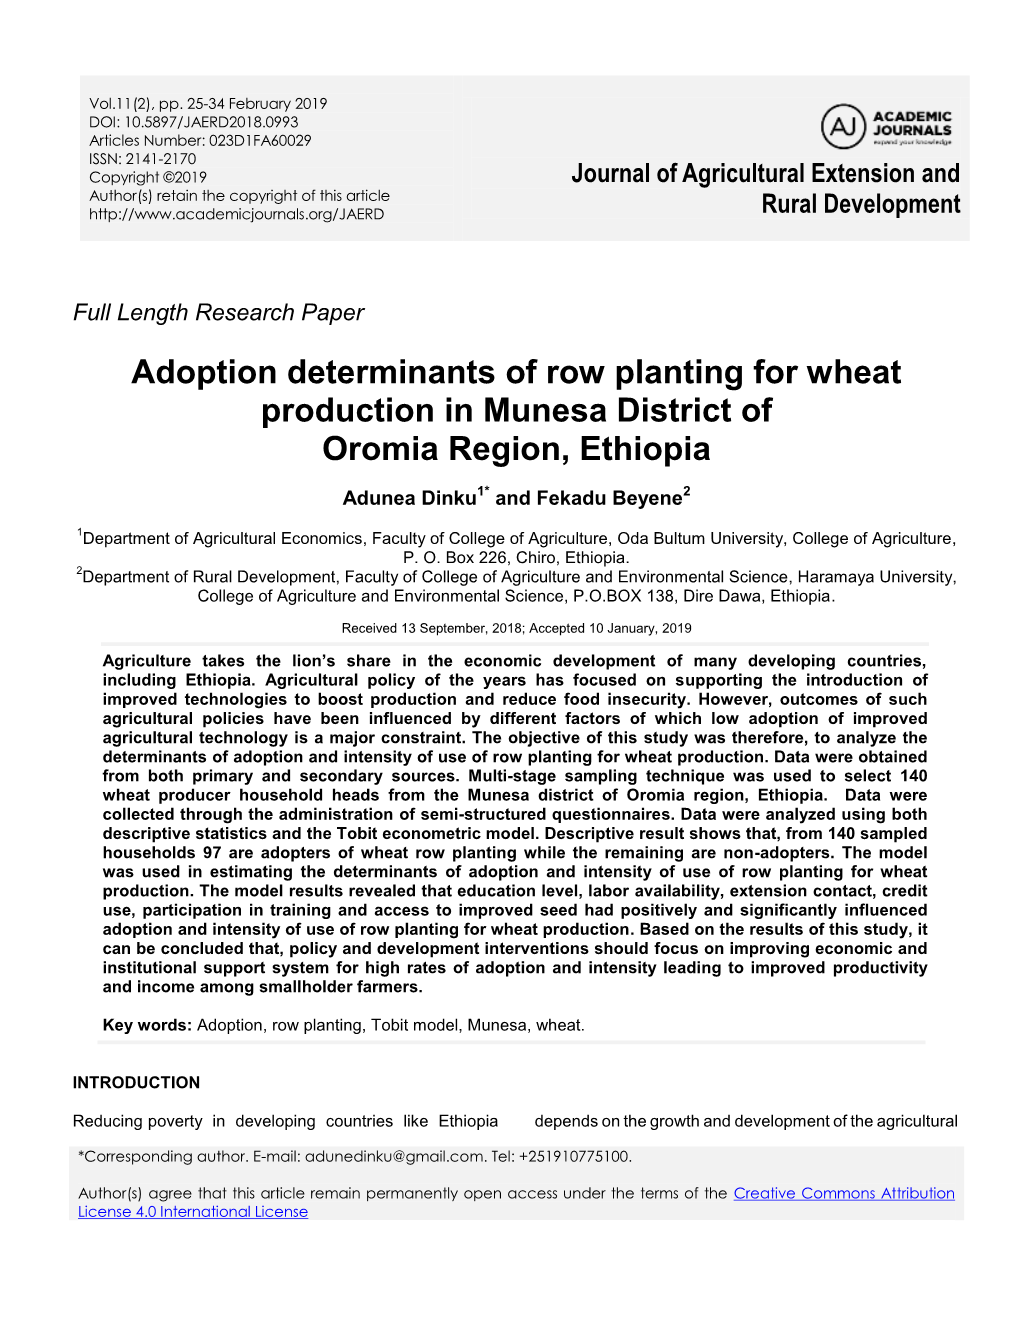 Adoption Determinants of Row Planting for Wheat Production in Munesa District of Oromia Region, Ethiopia